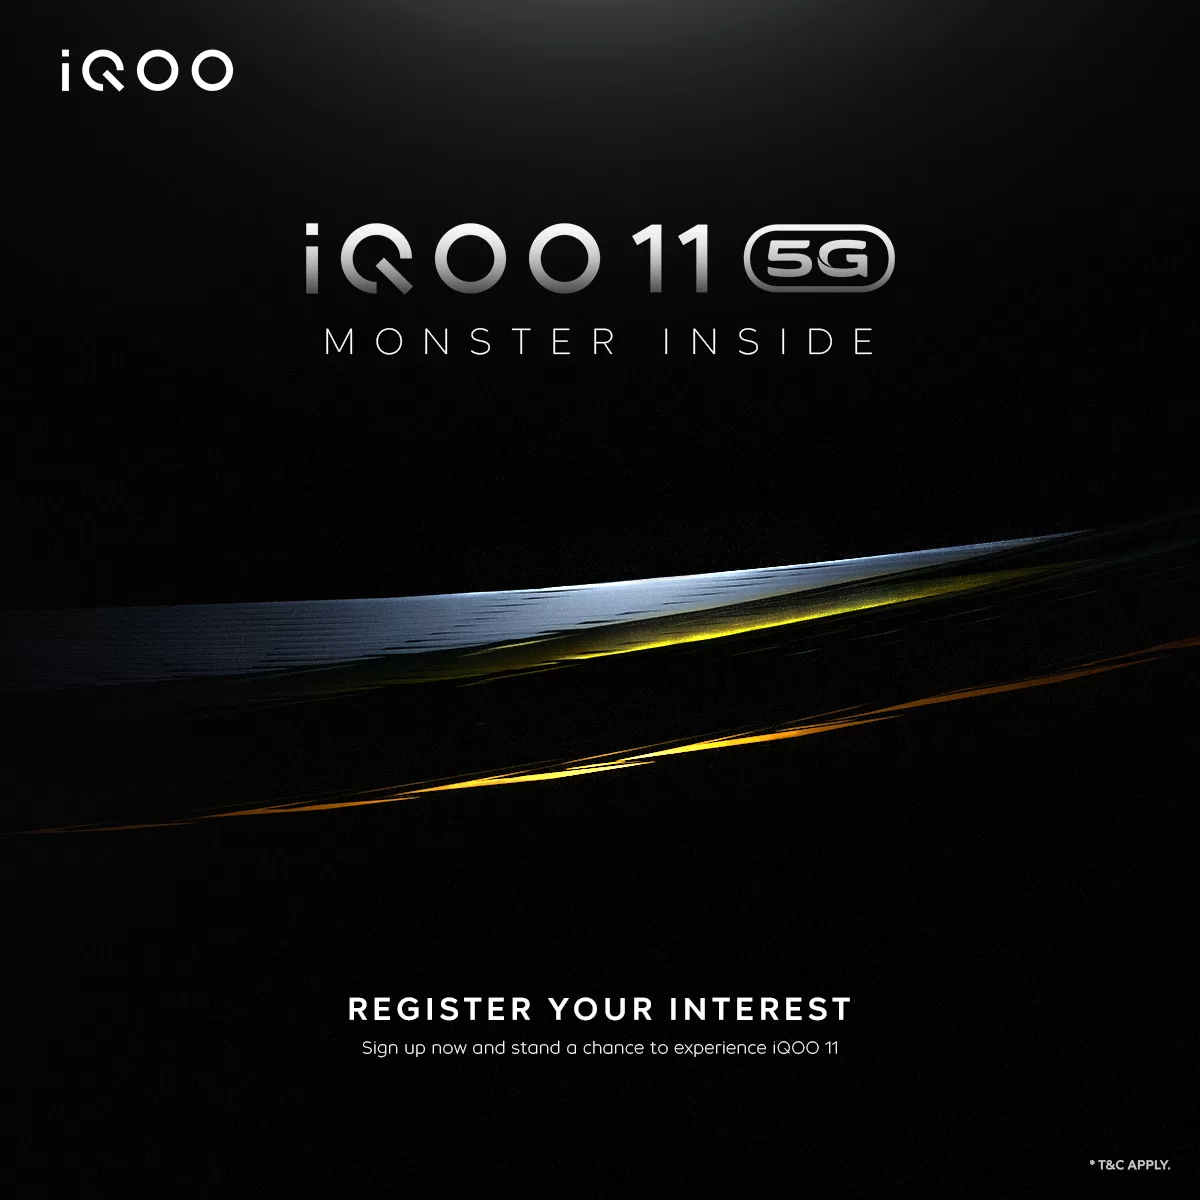 Register interest in the iQOO 11 5G